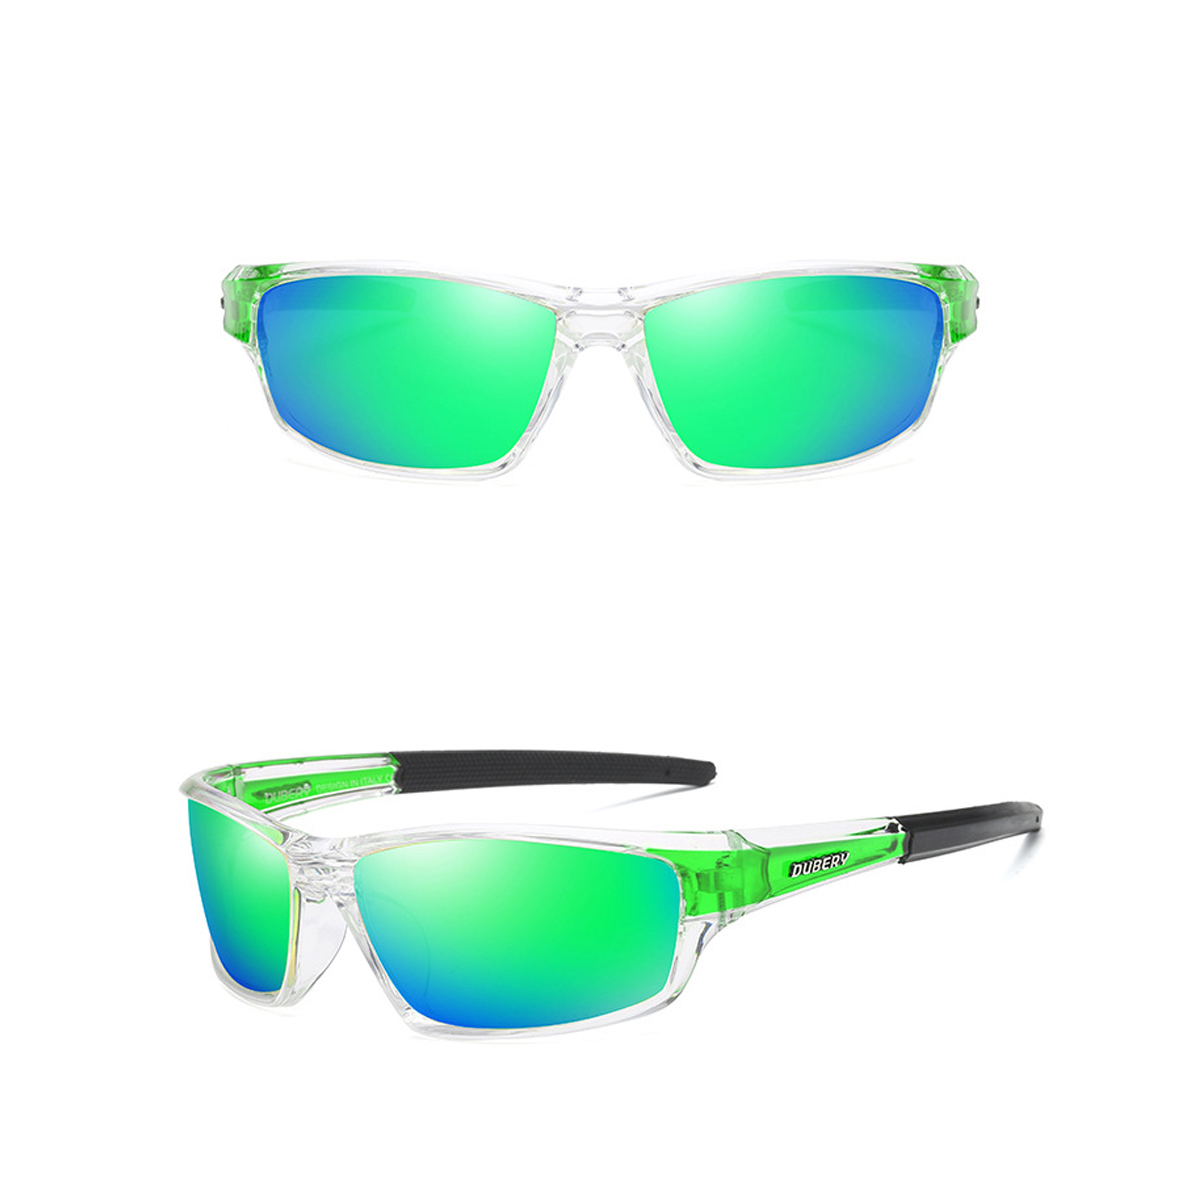 DUBERY-Unisex-UV400-Polarized-Sunglasses-Sport-Driving-Fishing-Cycling-Eyewear-1422161